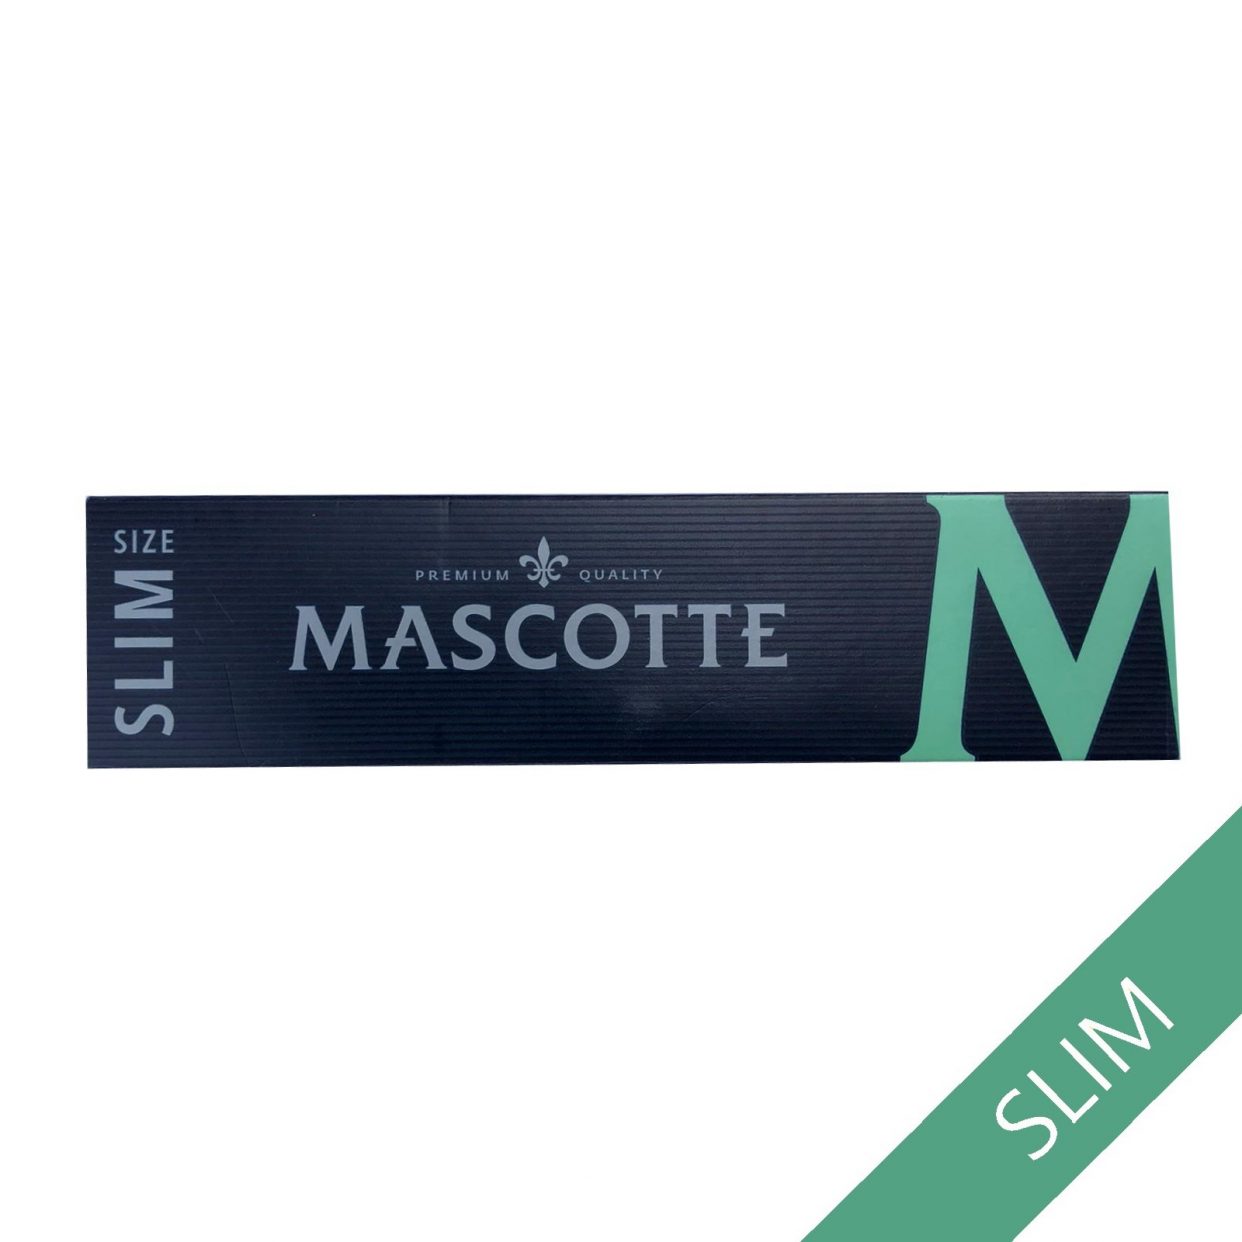 Mascotte Original - Slim Size met Magneet